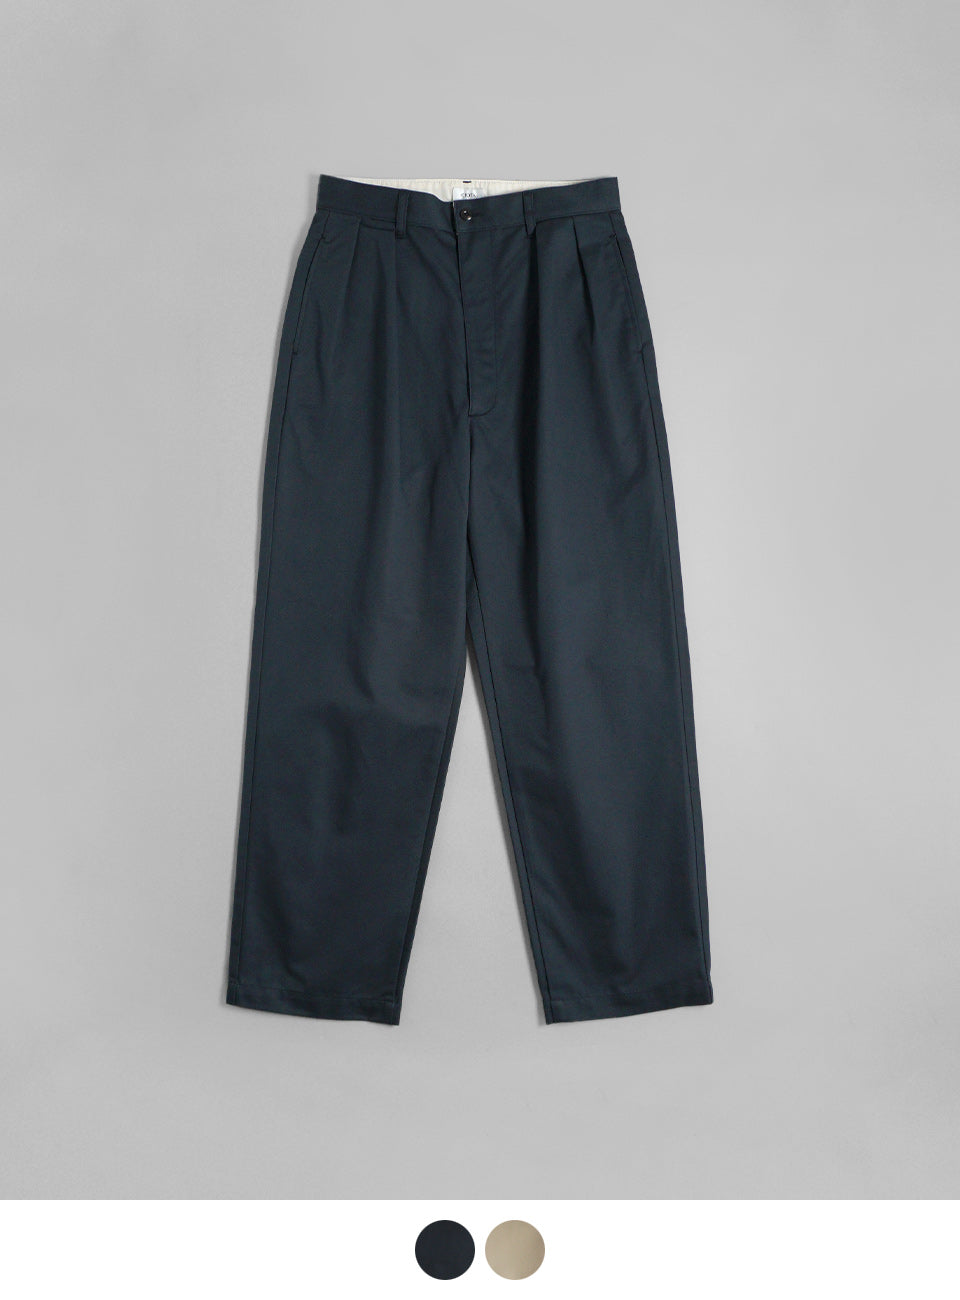 CIOTA シオタ 2タック チノ クロス パンツ 2 Tuck Chino Cloth Pants PTLM-147【送料無料】 正規取扱店